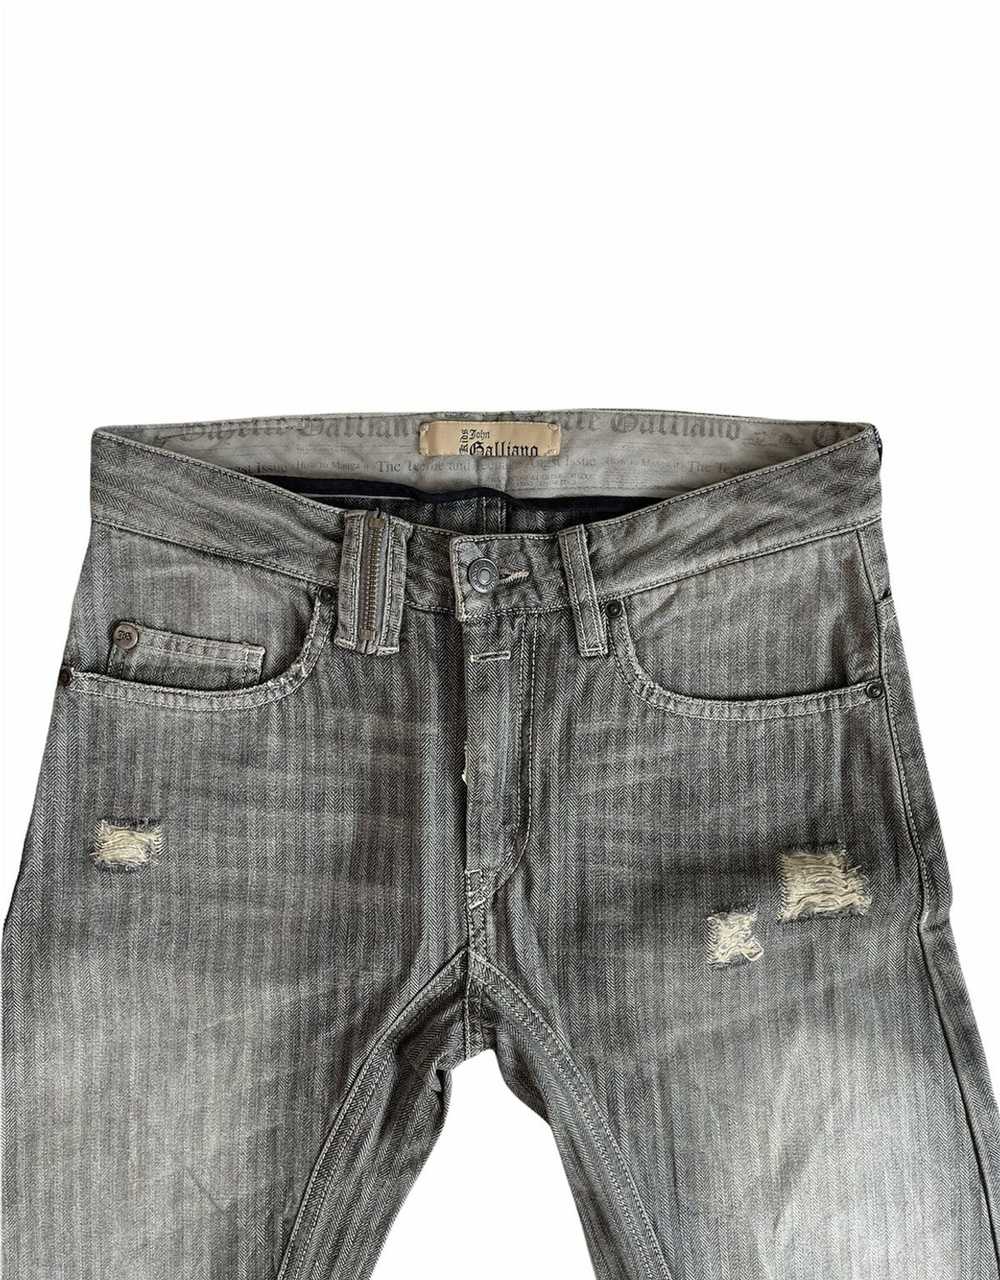 John Galliano John Galliano jeans rare - image 3